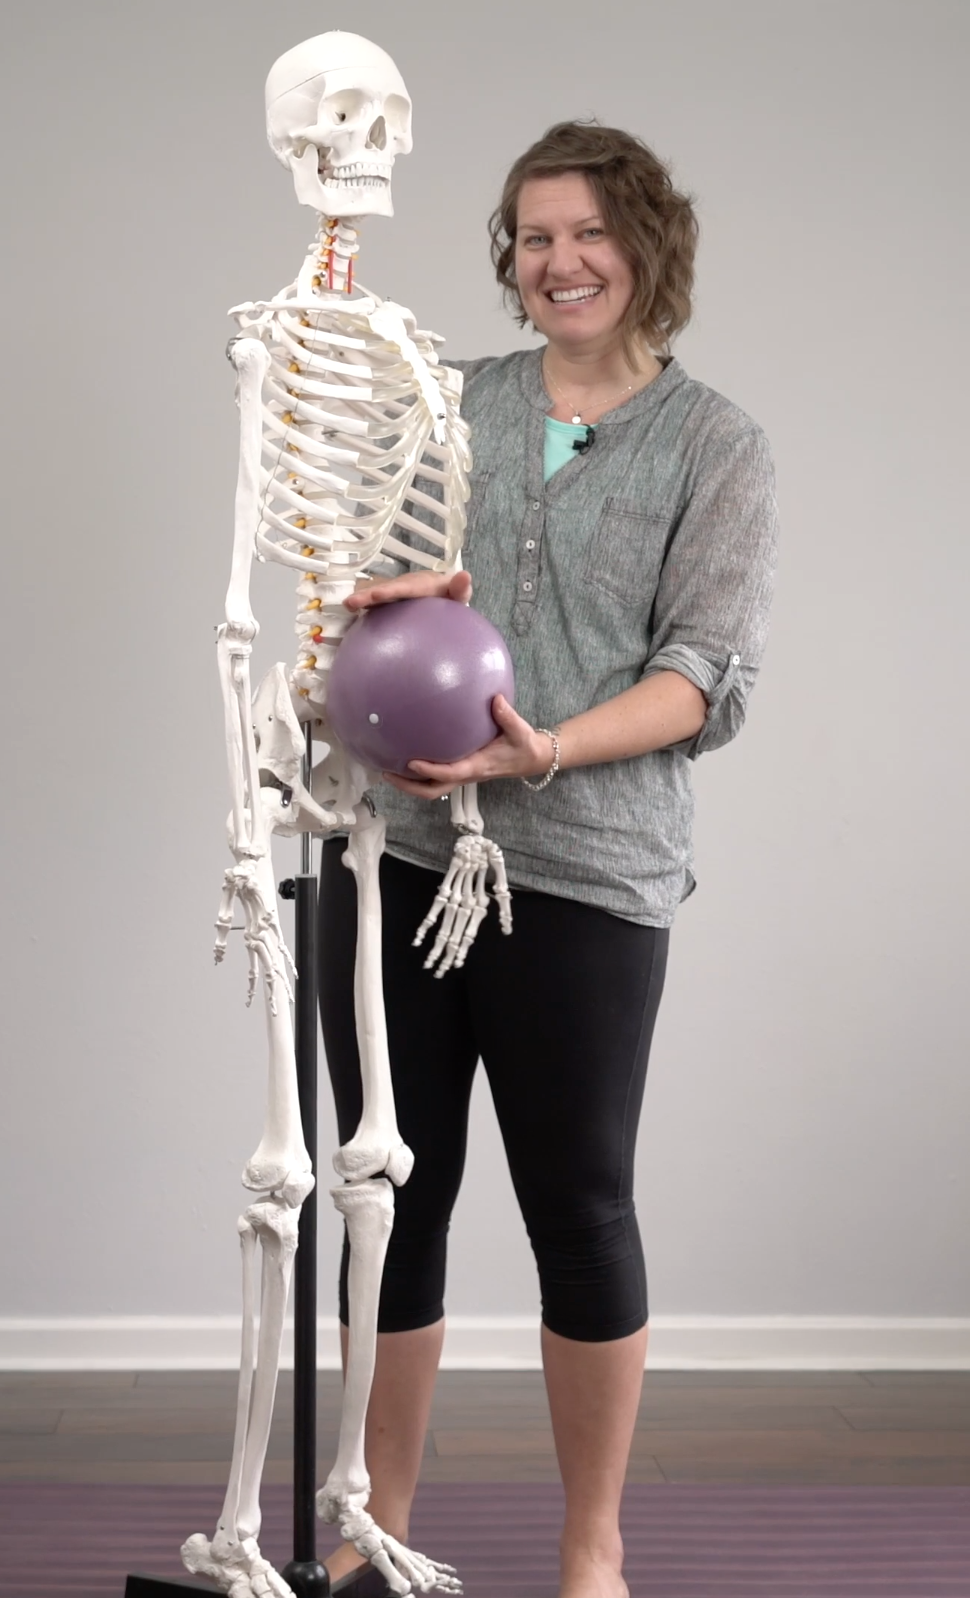 Tiffany and her skeleton model, Simon.